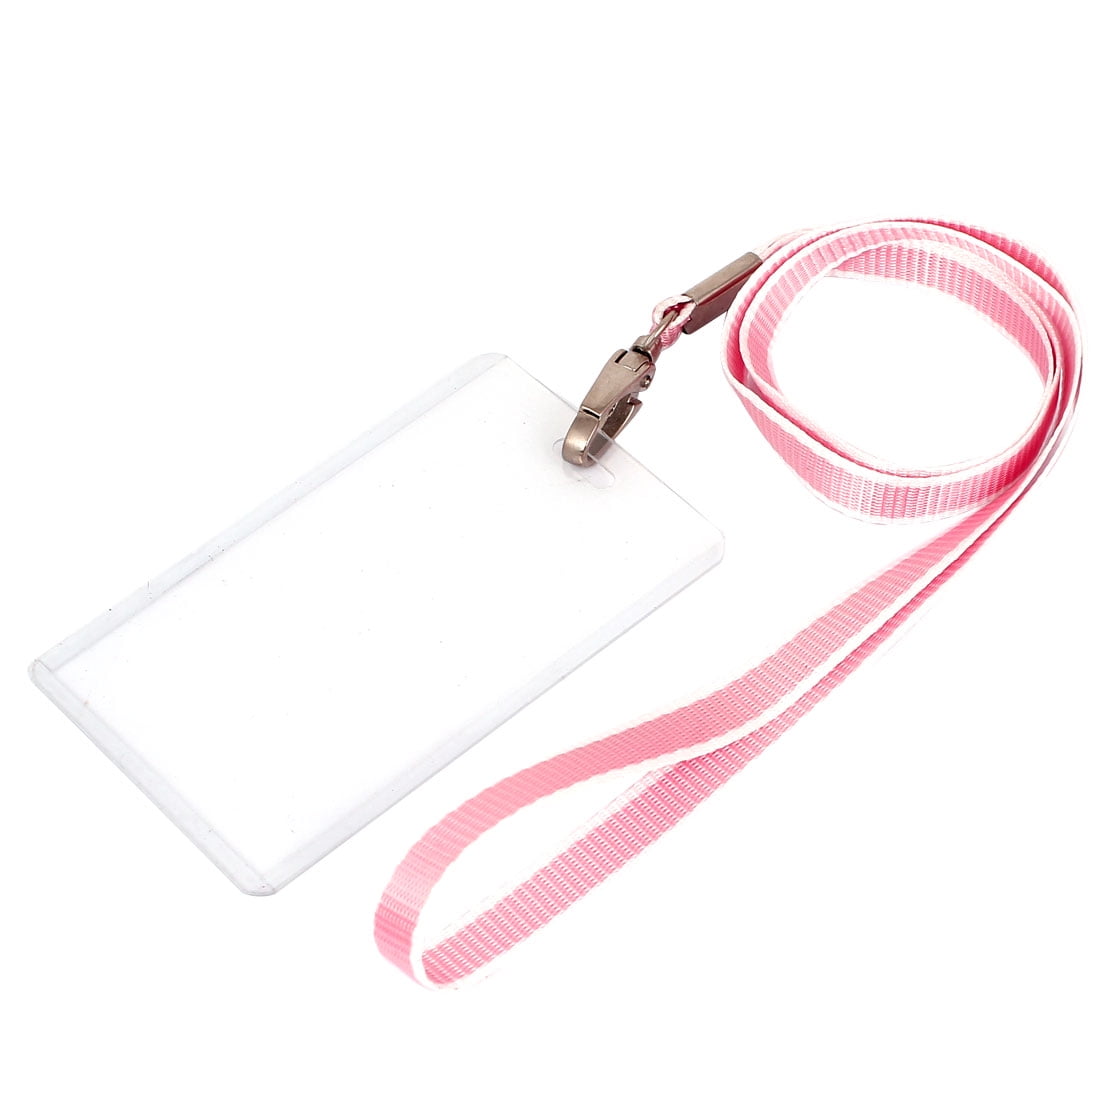 Plastic Document Case Business Badge Card holder with necklace lanyard stylish 